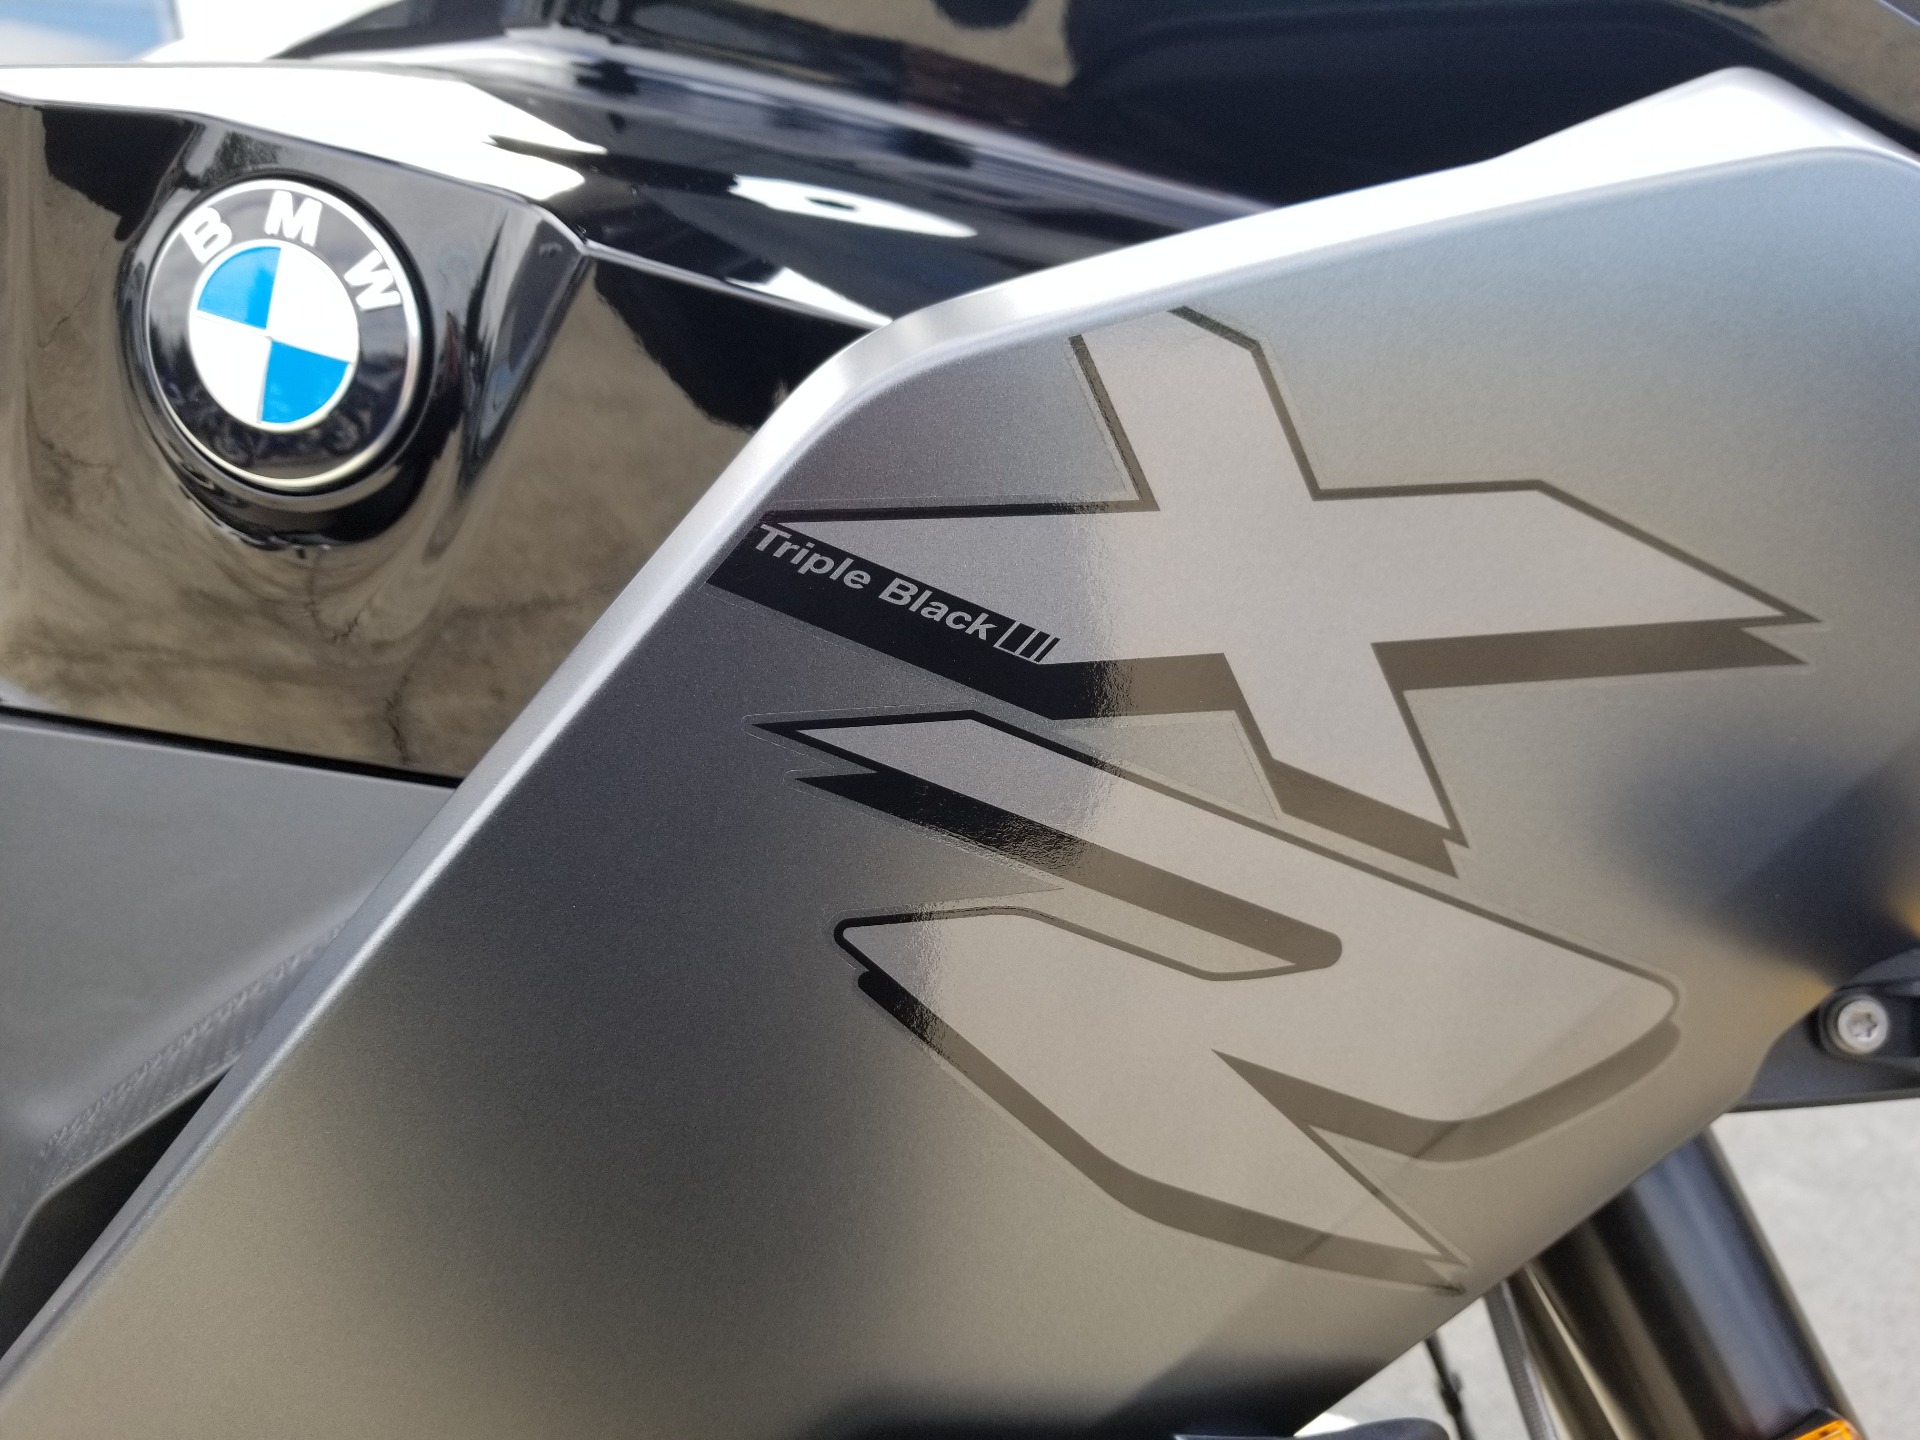 2022 BMW F 900 XR in Aurora, Ohio - Photo 3